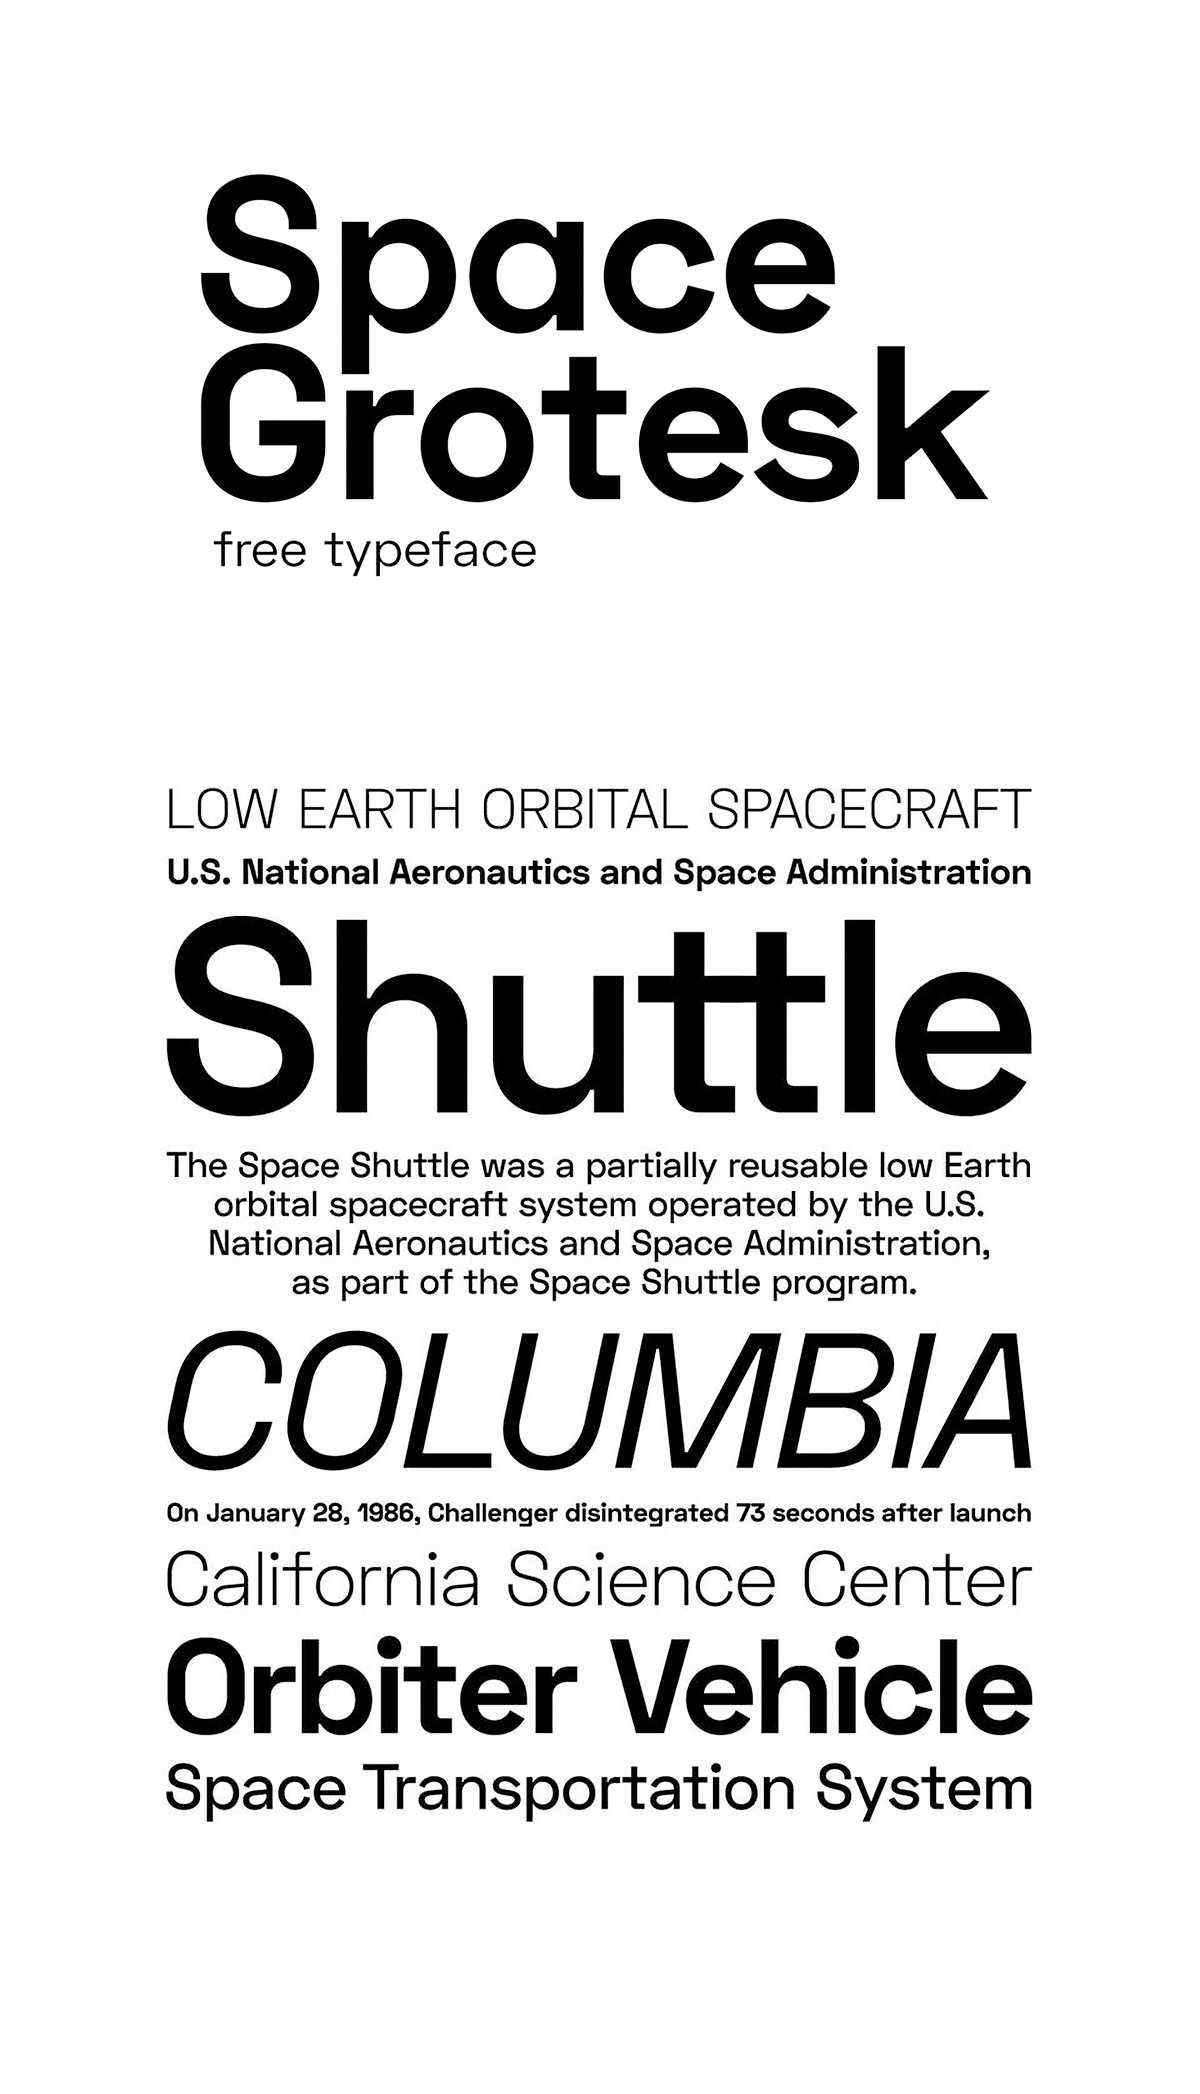 Space Grotesk - Free Sans-serif Font